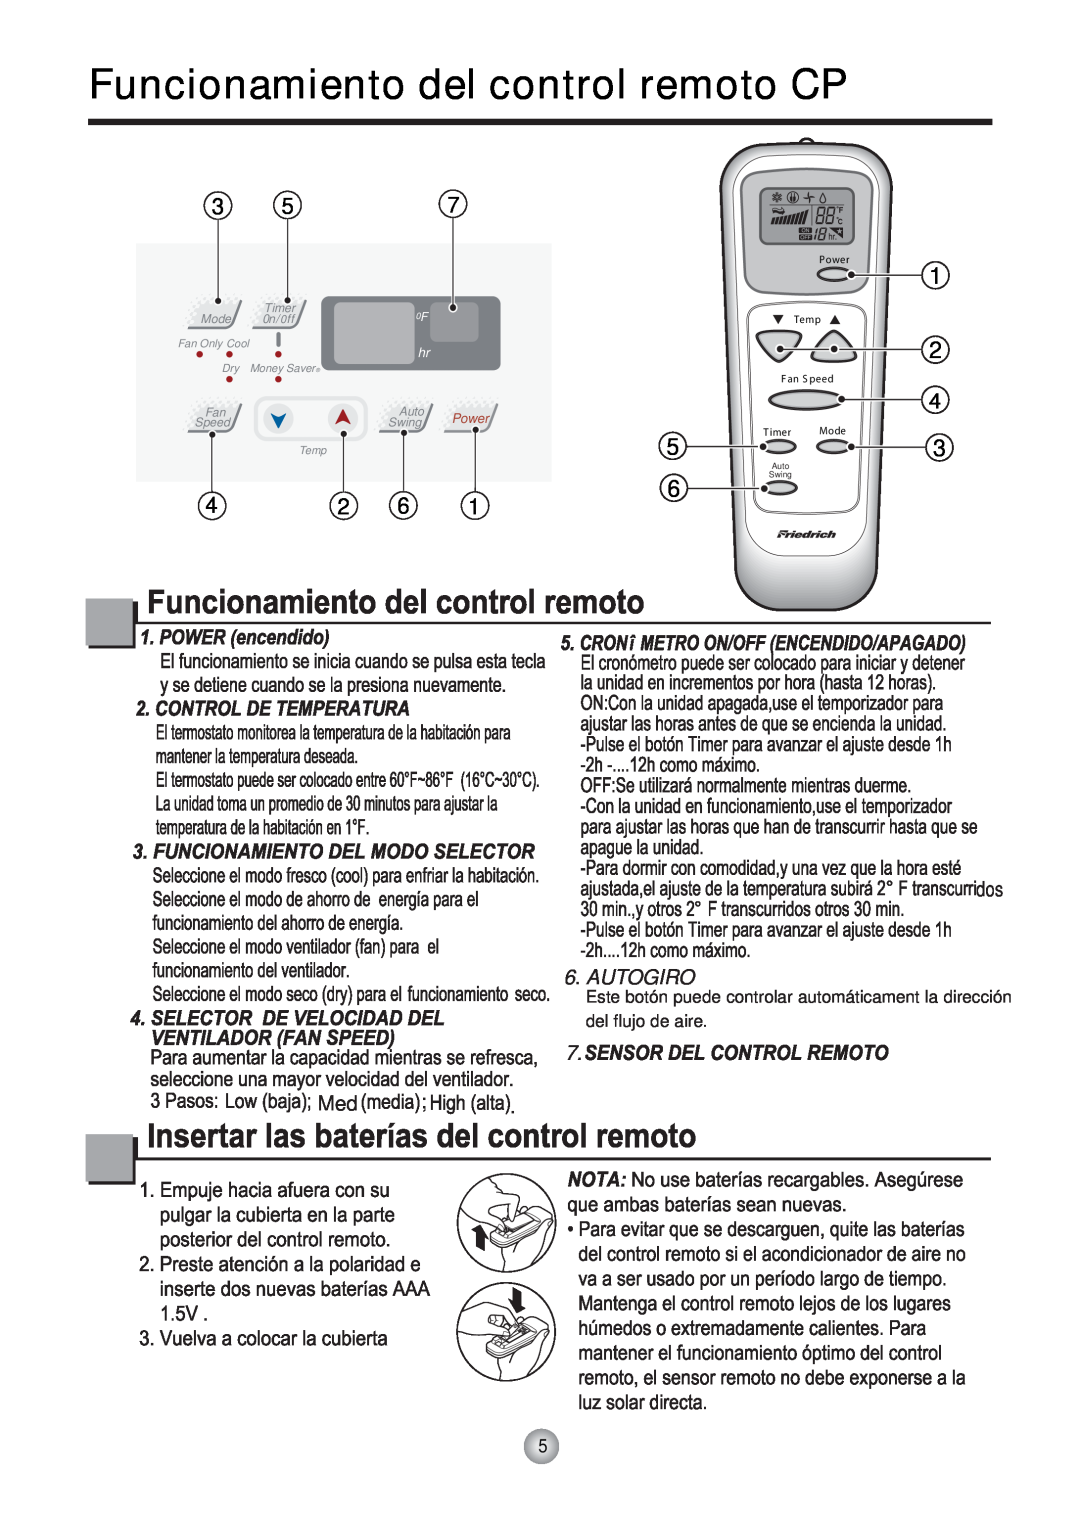 Friedrich CP10 Funcionamiento del control remoto CP, Power, Mode, Timer, 0n/ 0ff, Auto, Speed, Swing, Fan Only Cool, Temp 